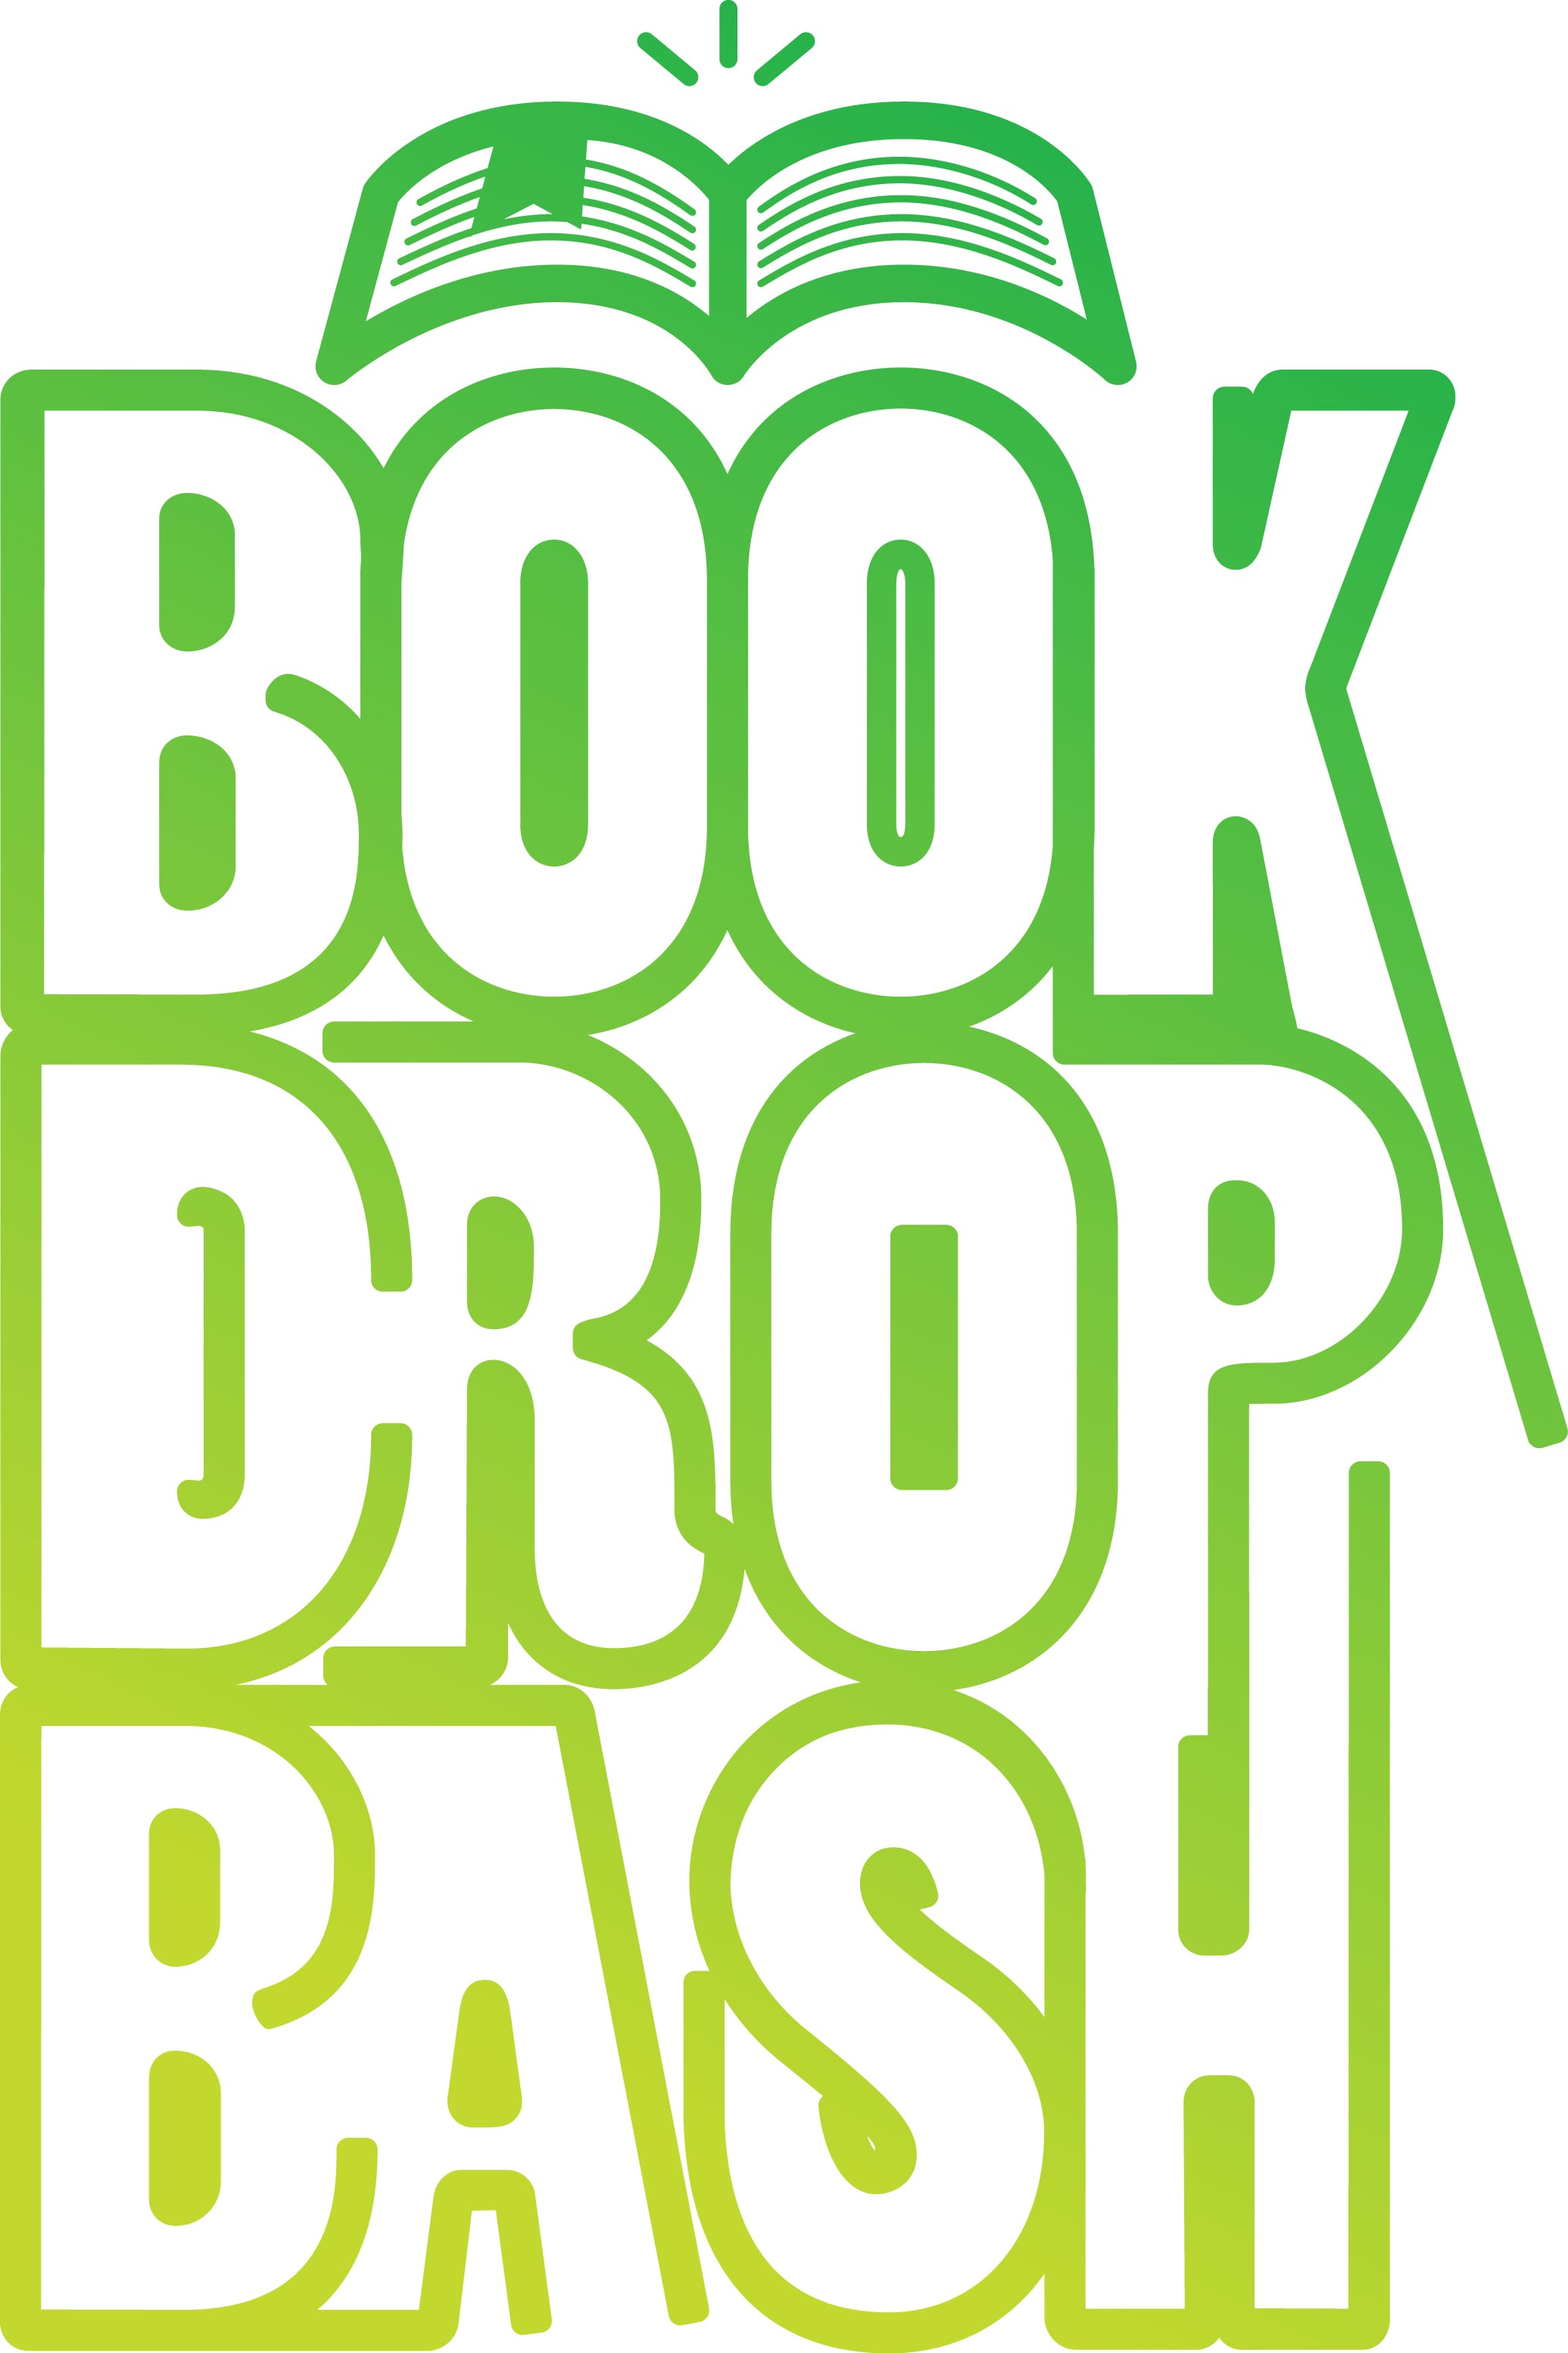 BookDropBash_LogoRGB